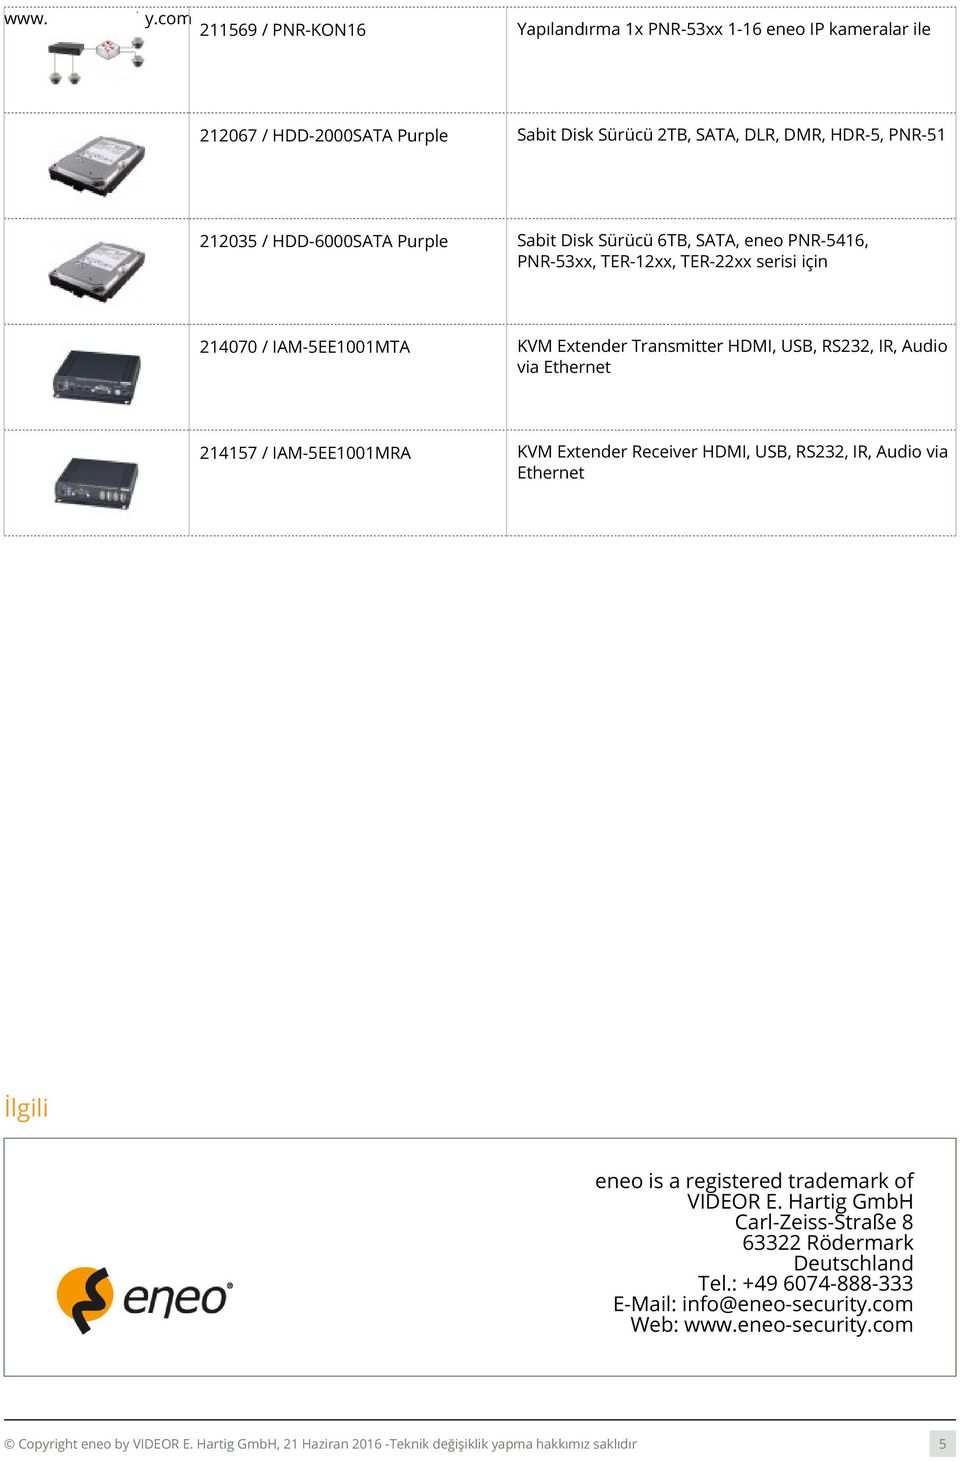 IAM-5EE1001MRA KVM Extender Receiver HDMI, USB, RS232, IR, Audio via Ethernet İlgili eneo is a registered trademark of VIDEOR E.